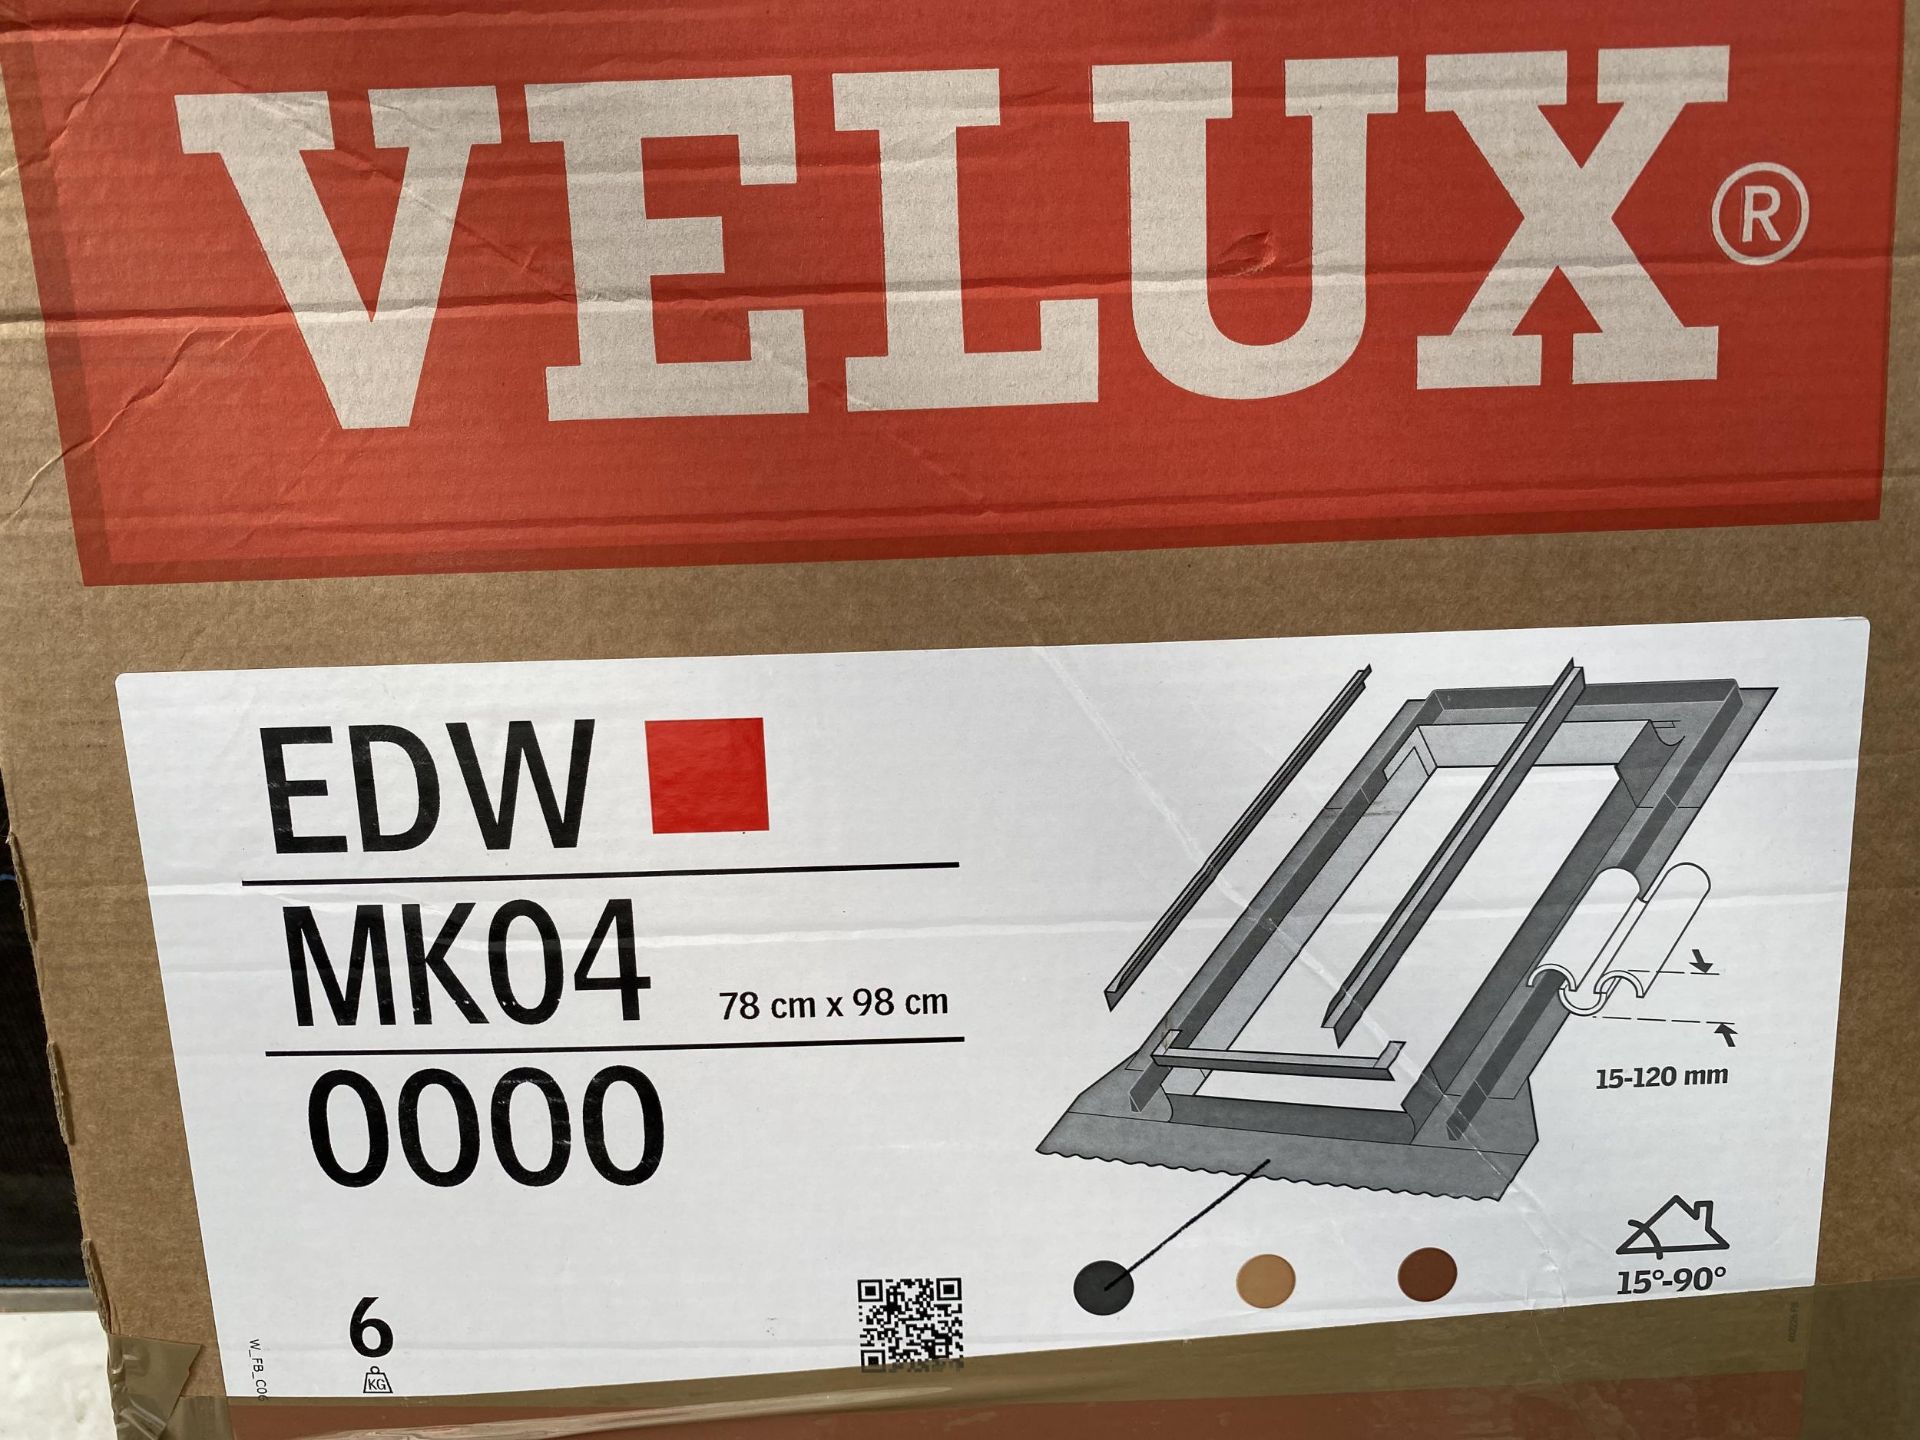 A VELUX WINDOW, EDW MK04 (78CM X 98CM) - Image 2 of 4